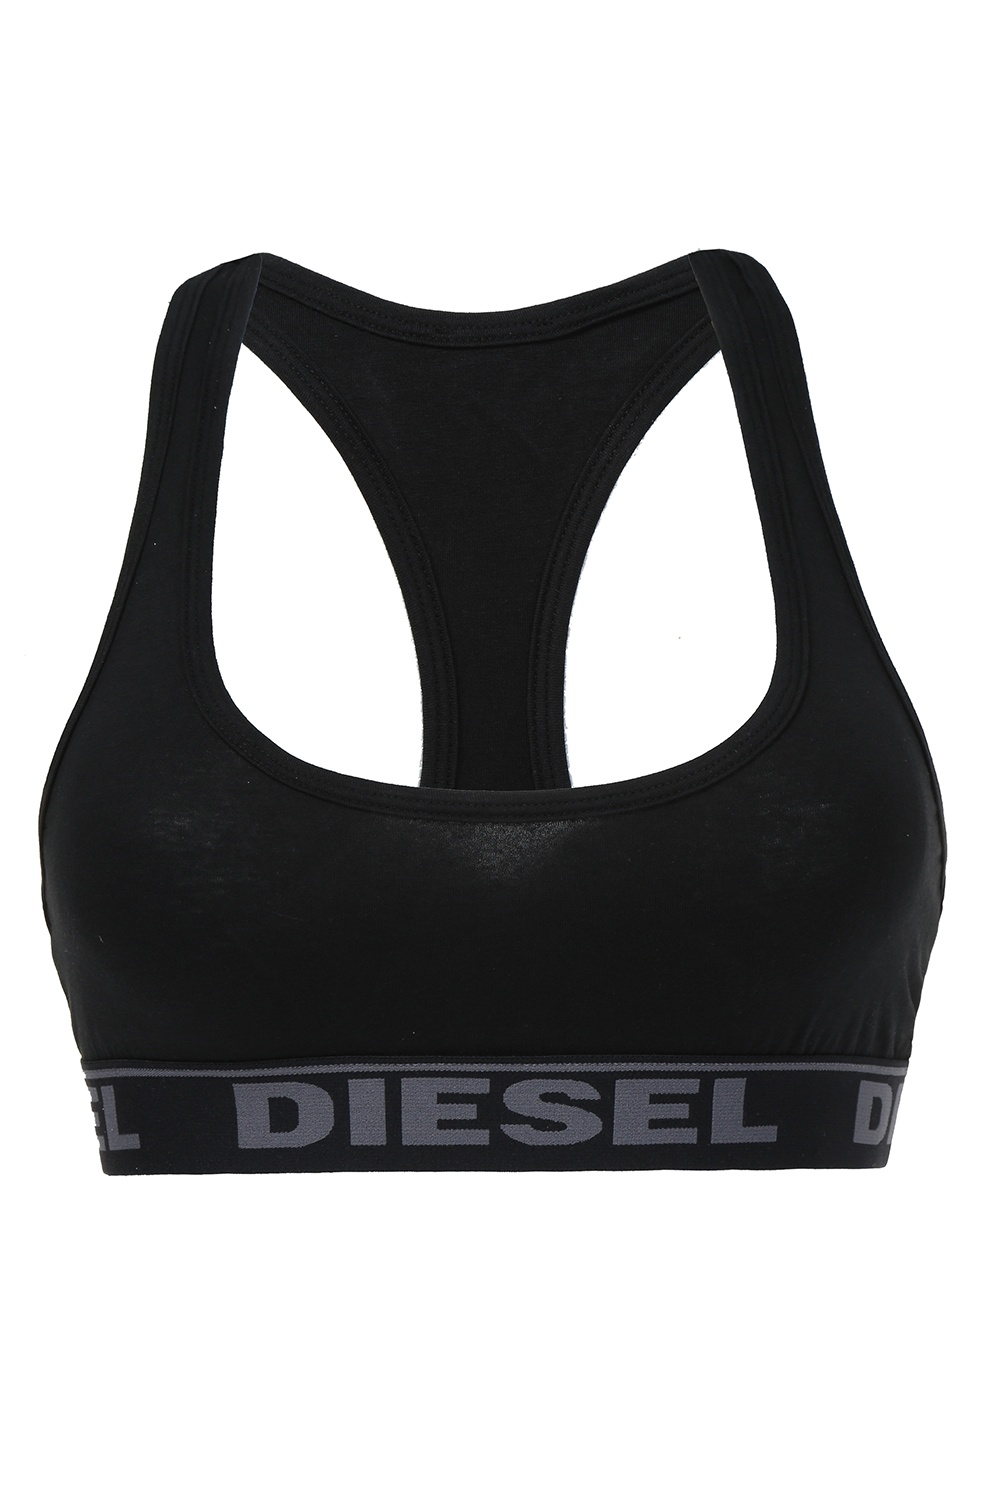 Black Sports bra Diesel - Vitkac Italy